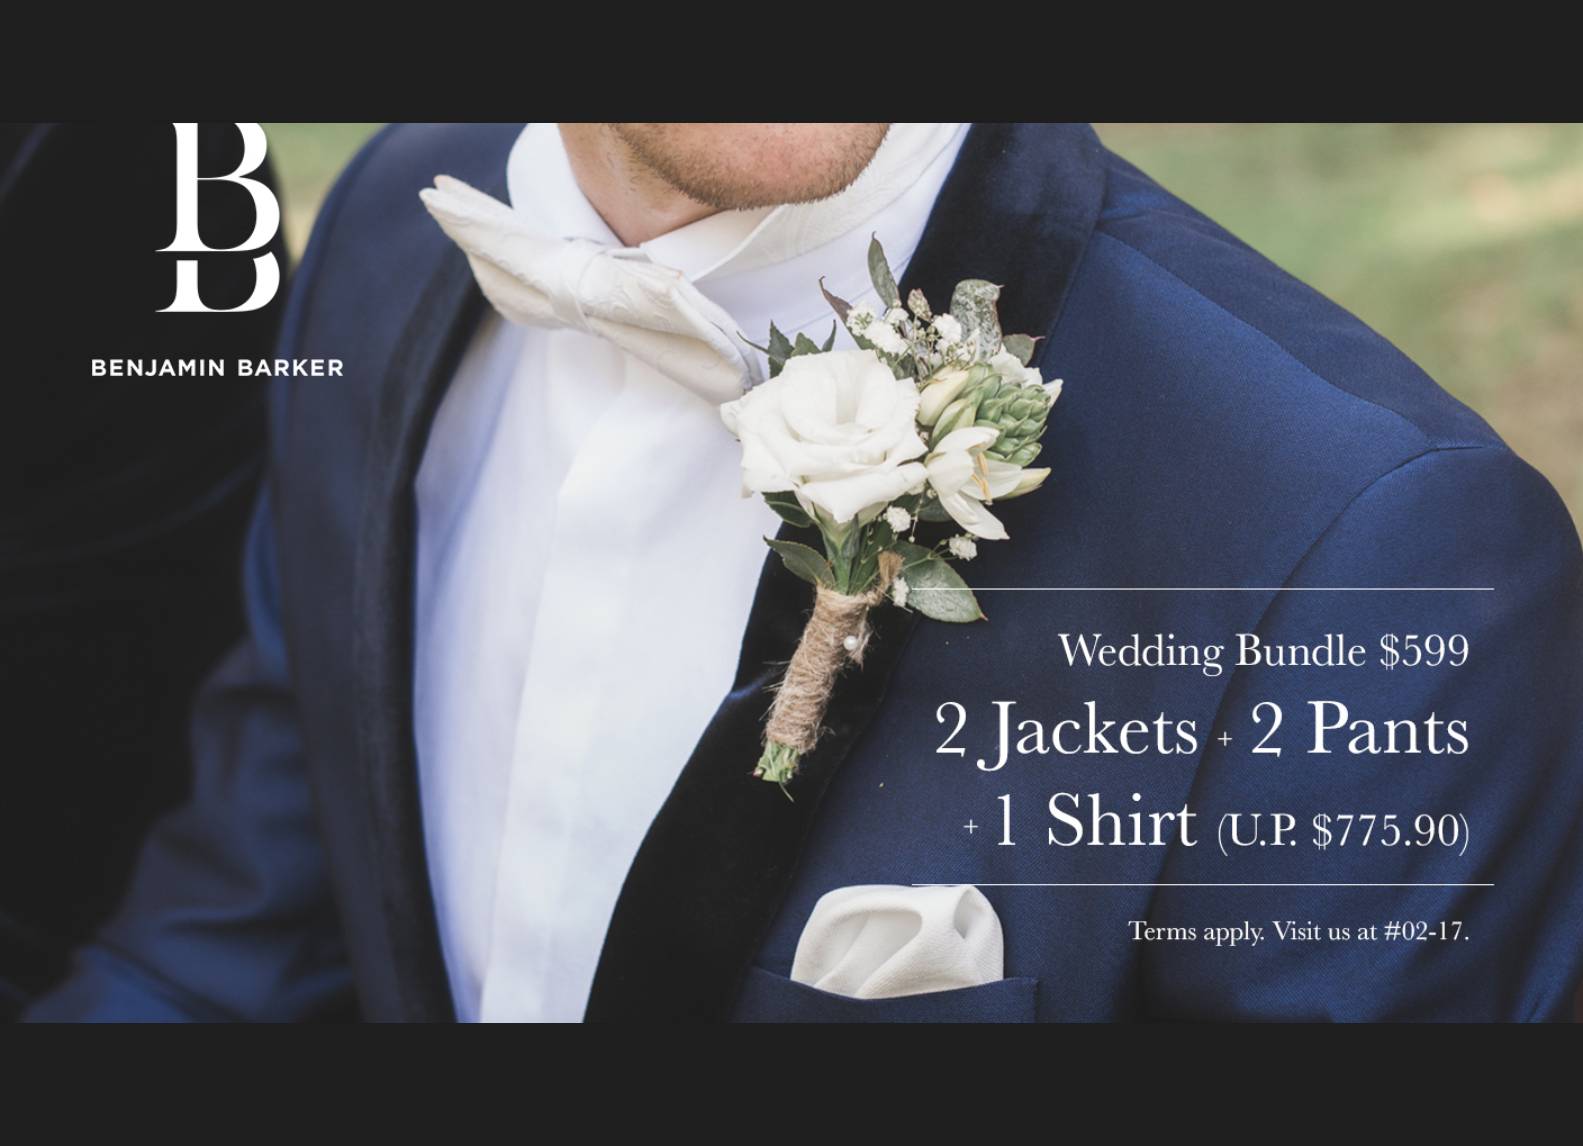 Benjamin Barker $599 Wedding Bundle